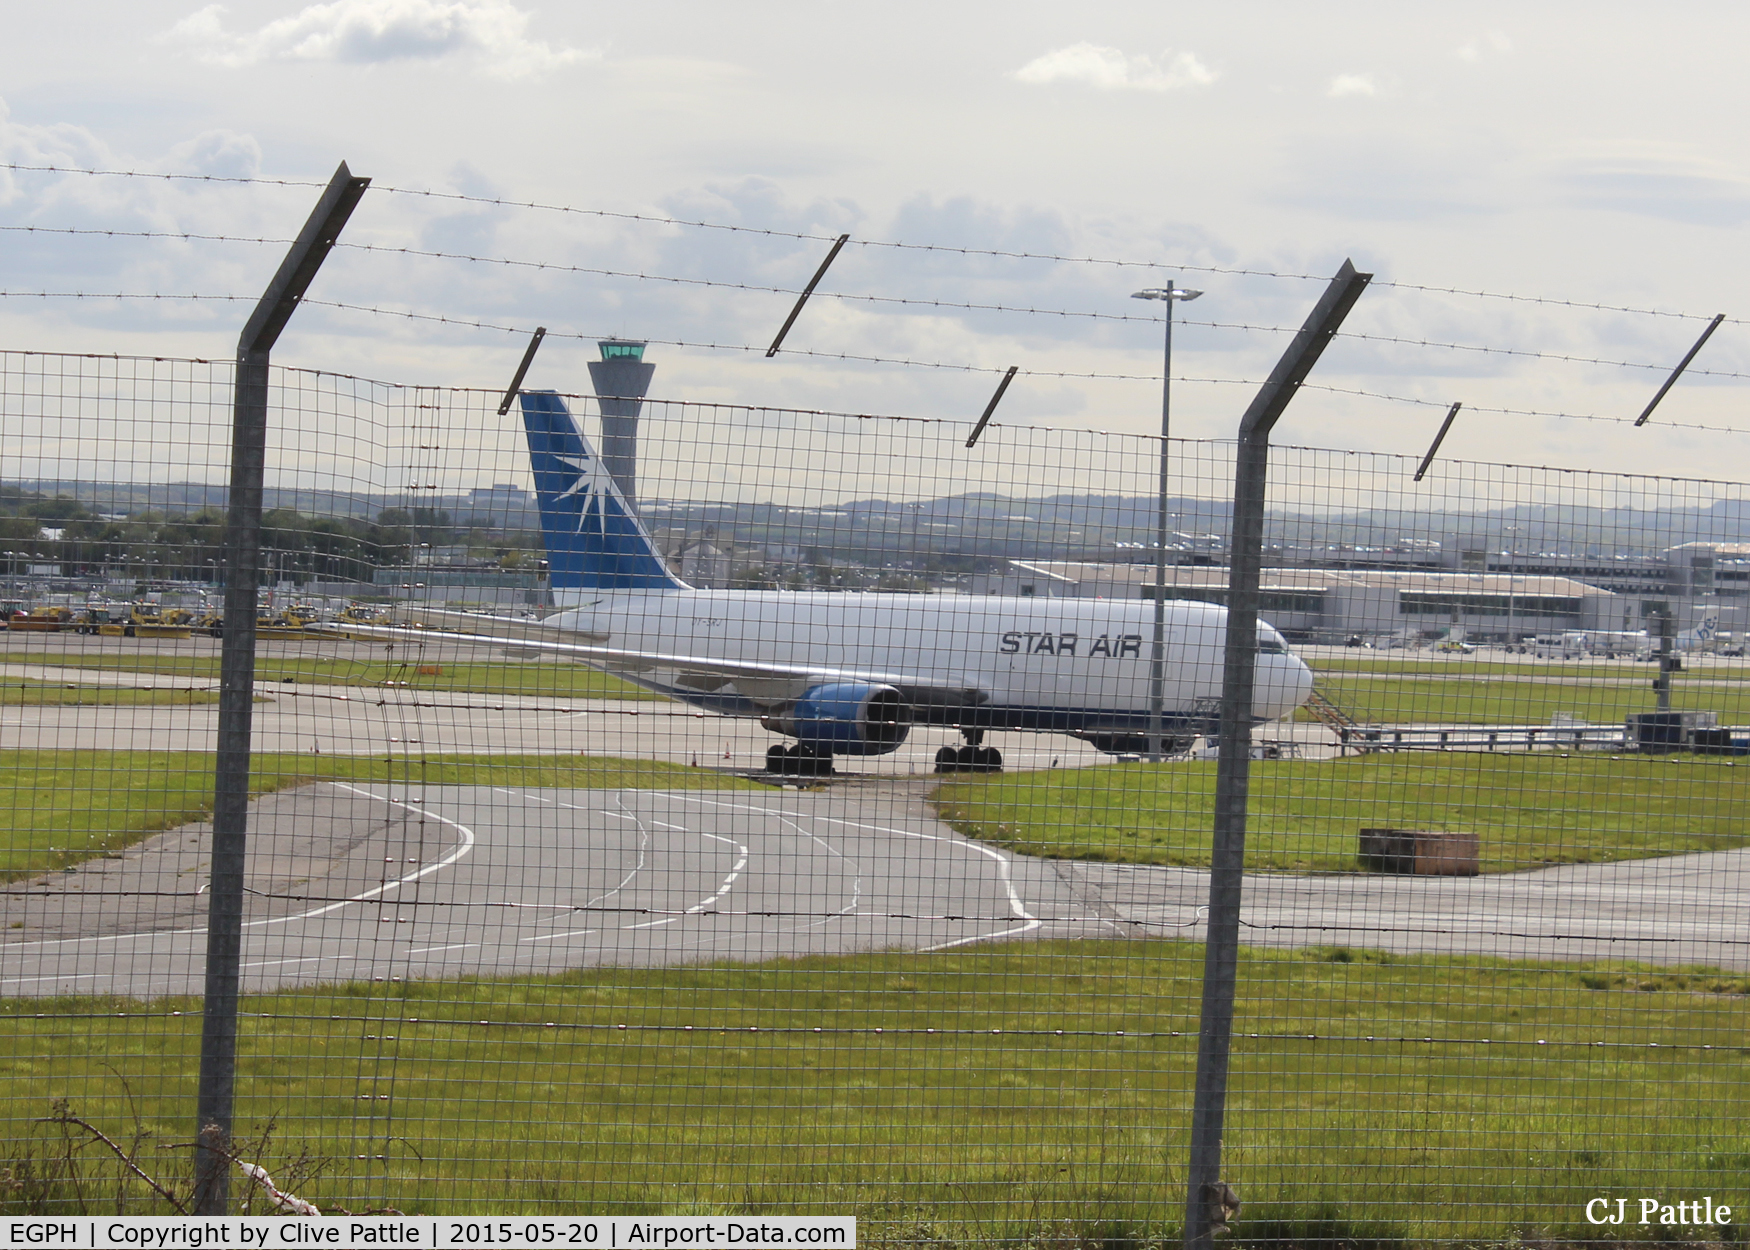 Edinburgh Airport, Edinburgh, Scotland United Kingdom (EGPH) - The cargo north side area viewed through the fence at Edinburgh EGPH